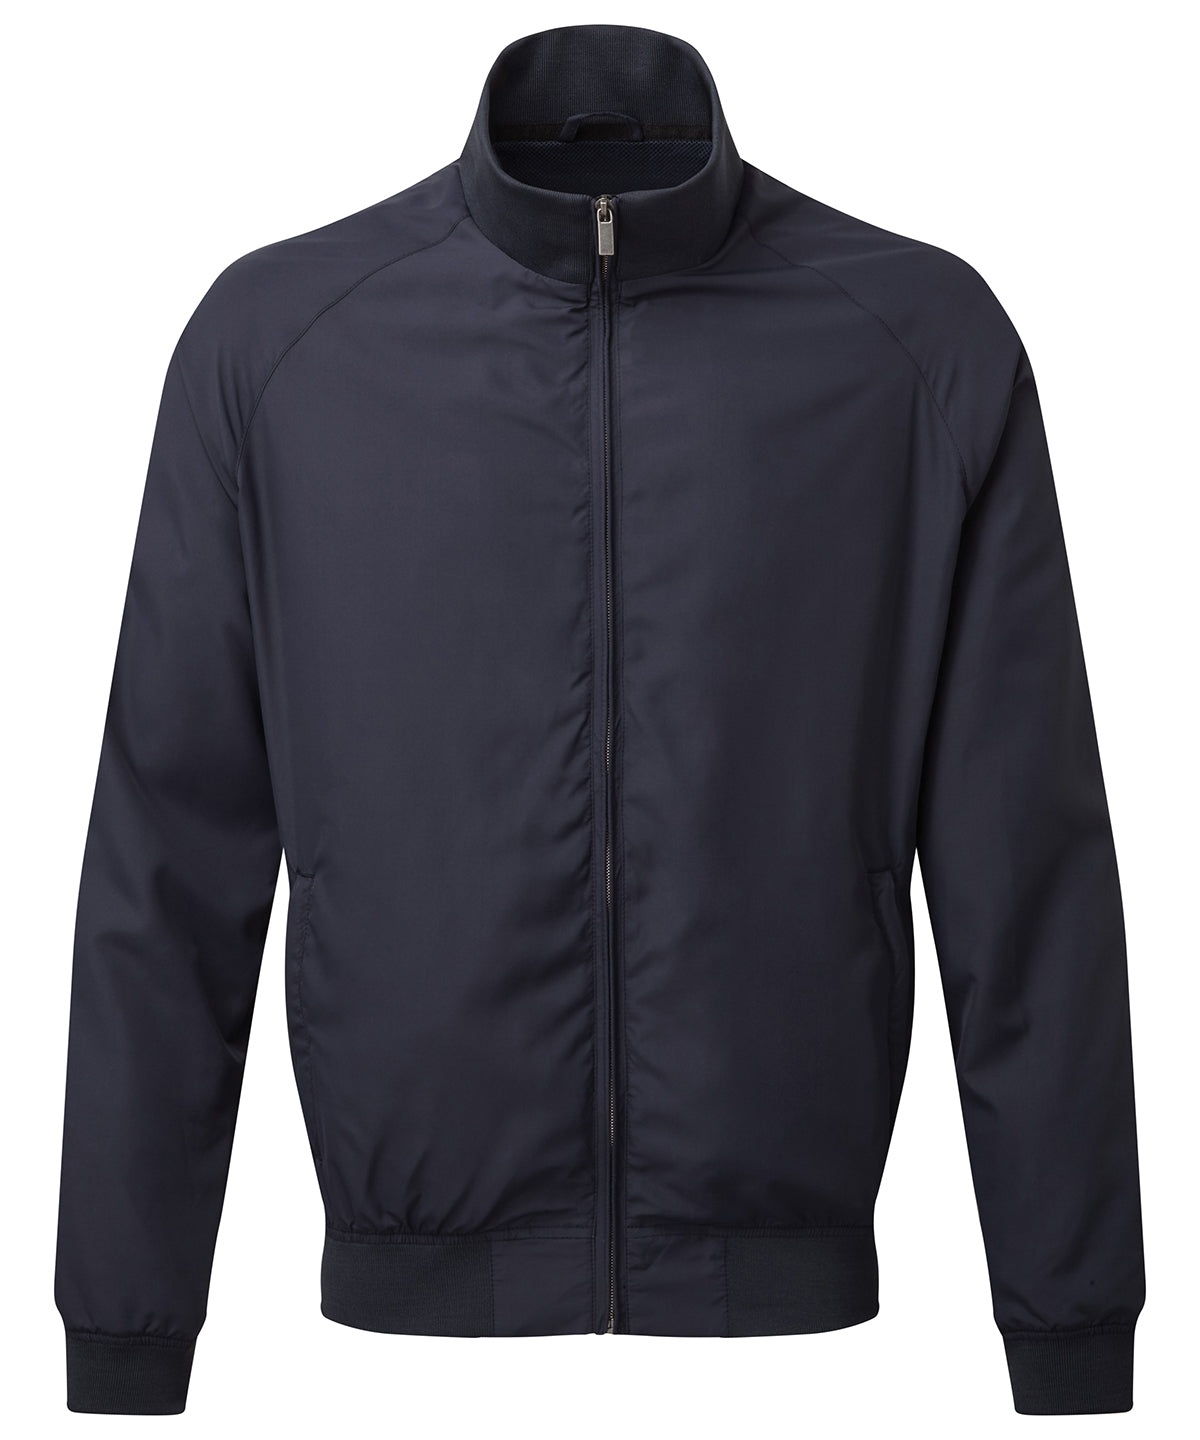 Personalised Jackets - Black Asquith & Fox Men's Harrington jacket